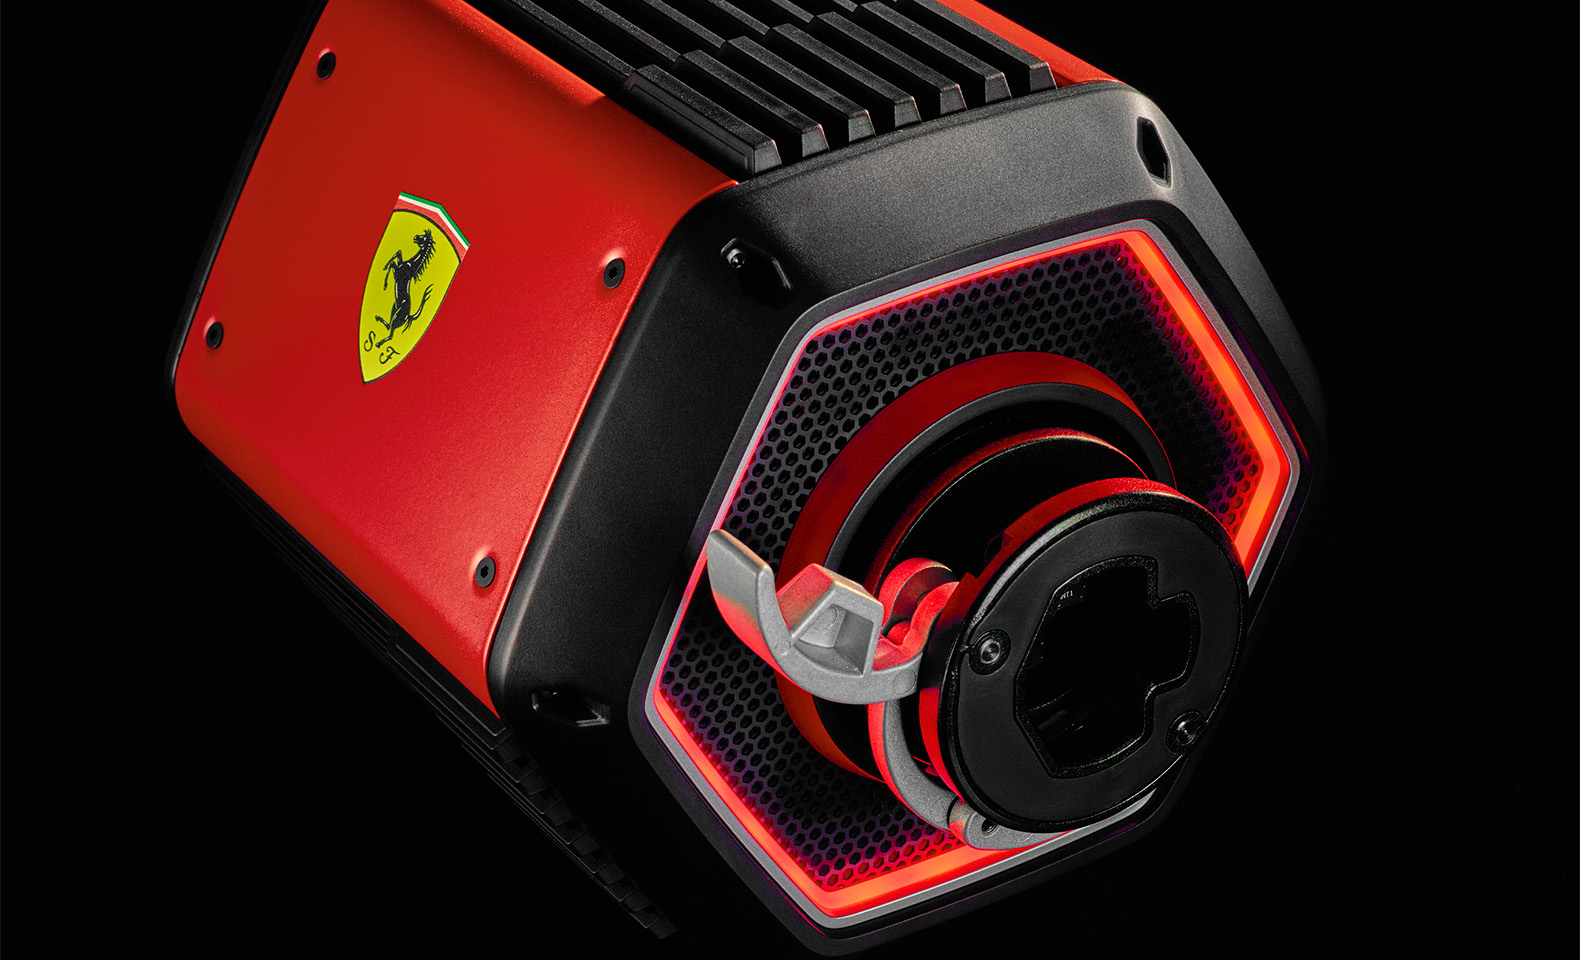 T818 Ferrari SF1000 Simulator - Racing